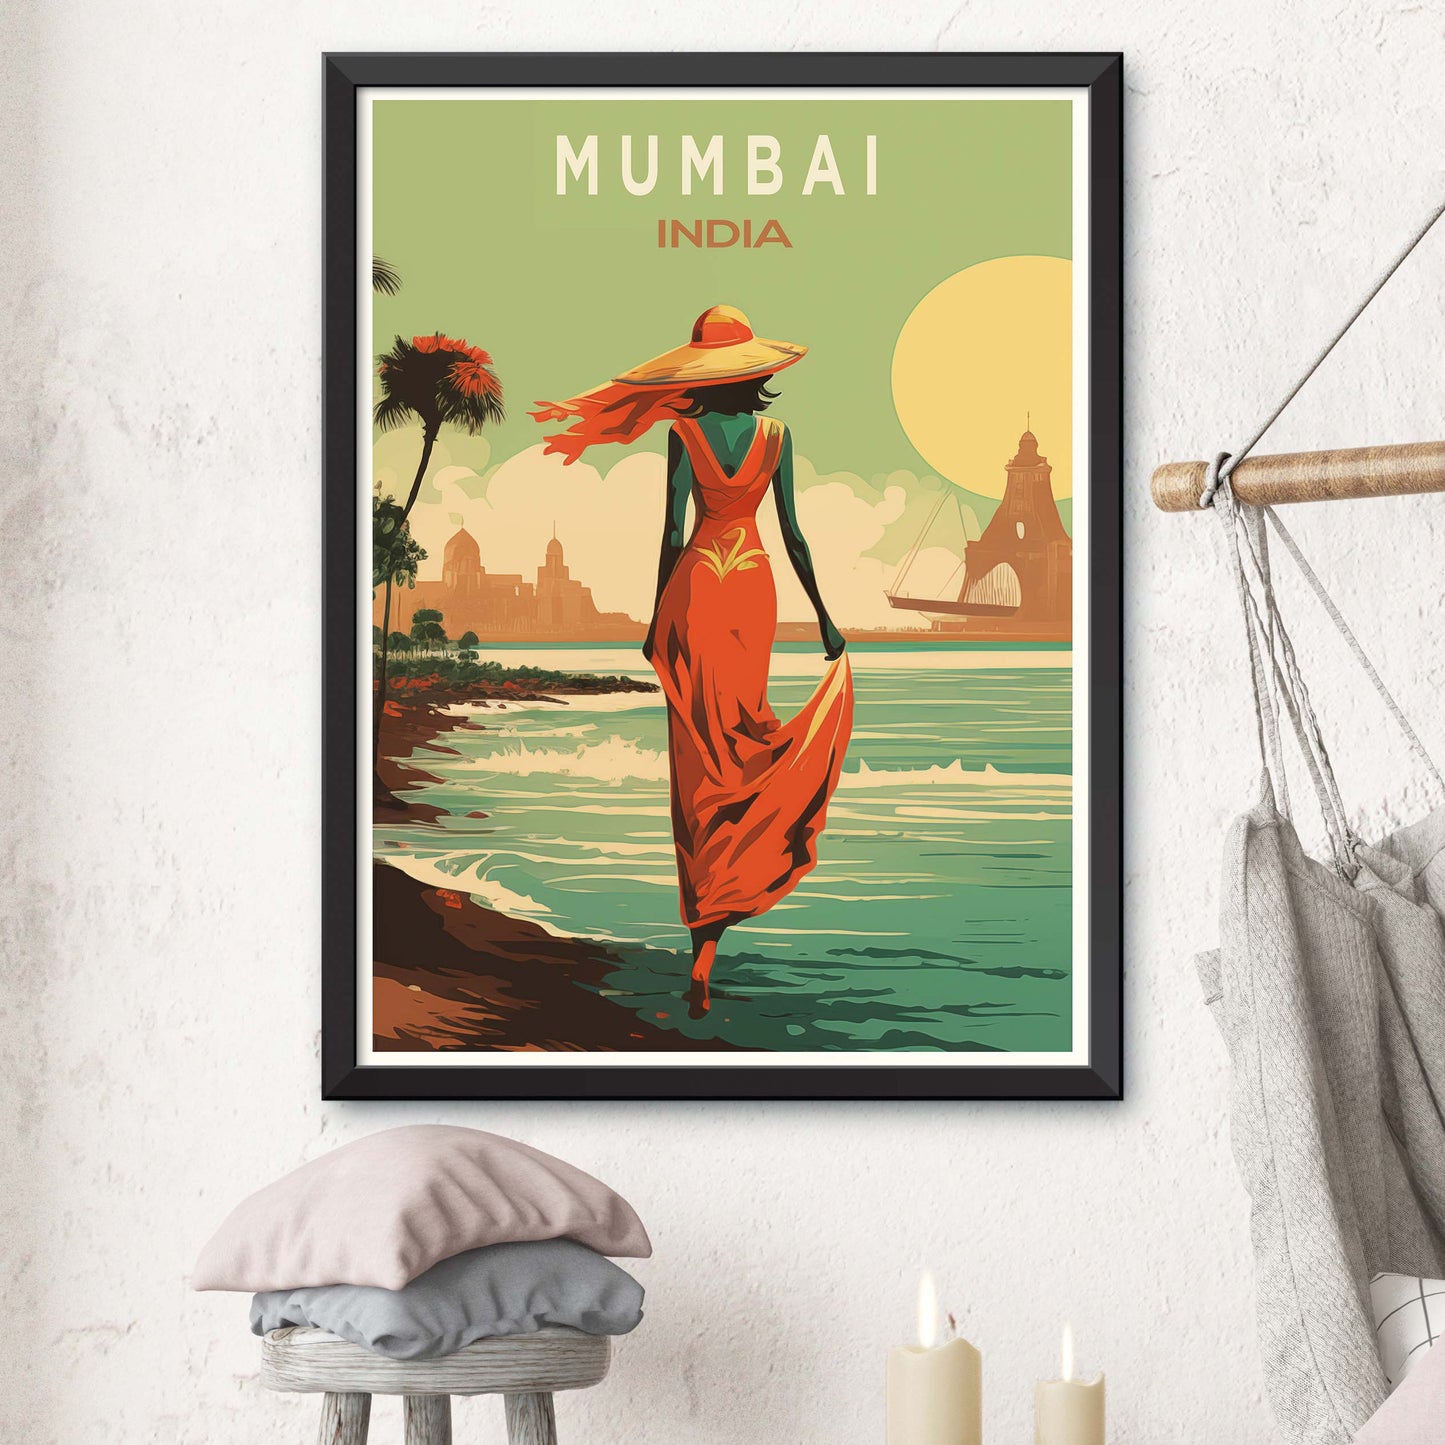 Mumbai India Vintage Travel Posters